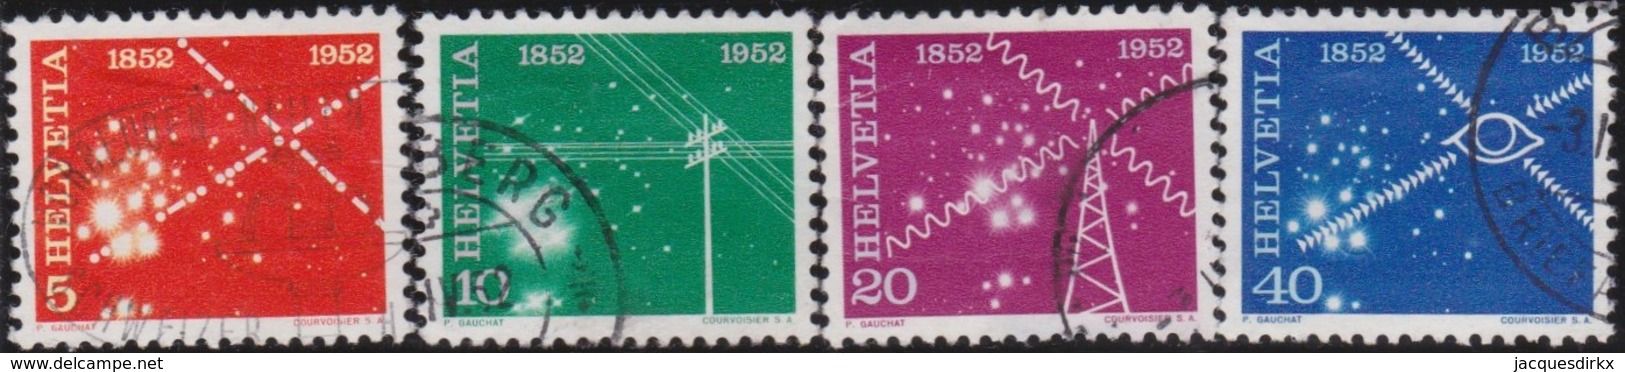 Suisse    .   Yvert        .    517/520     .   O      .   Oblitéré   .   /   .   Gebraucht - Used Stamps